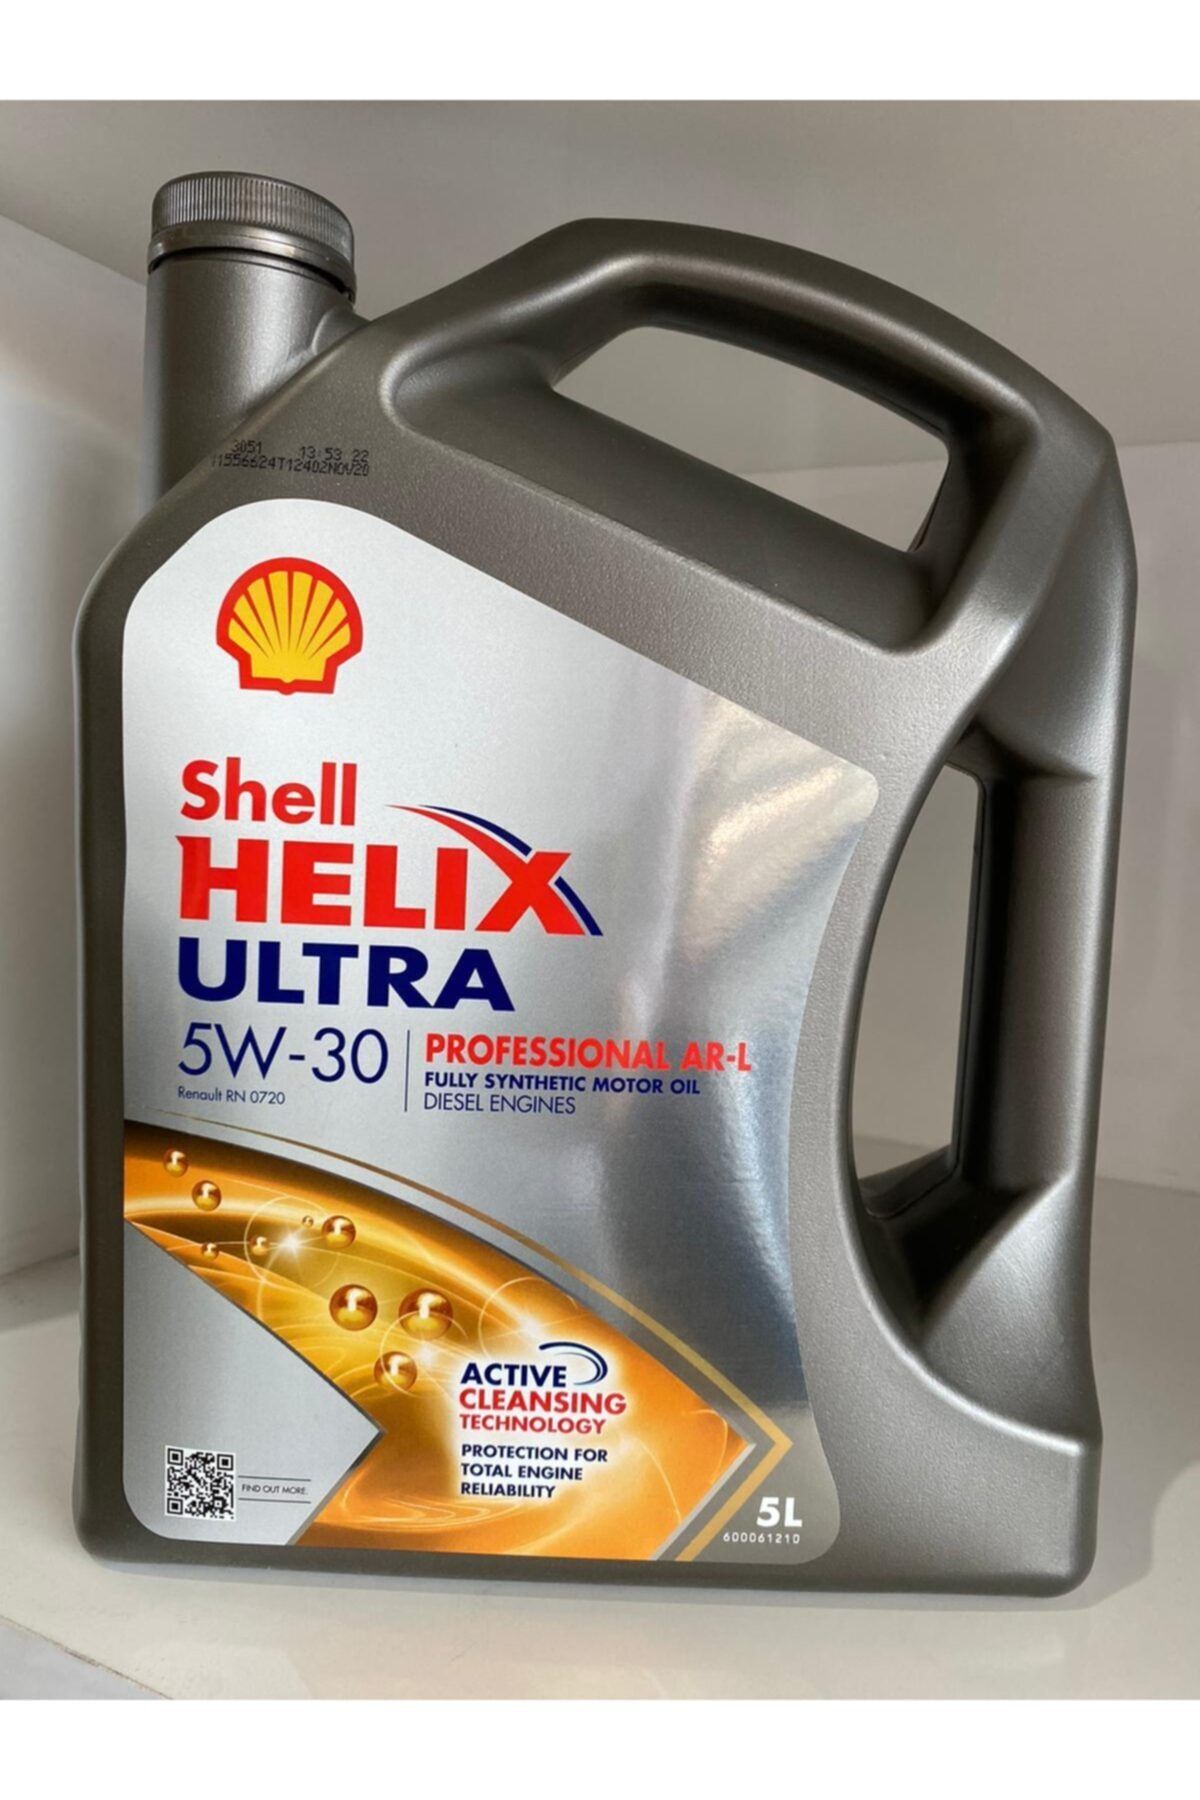 Shell Helıx Ultra Professıonal Ar-l 5w-30 5litre